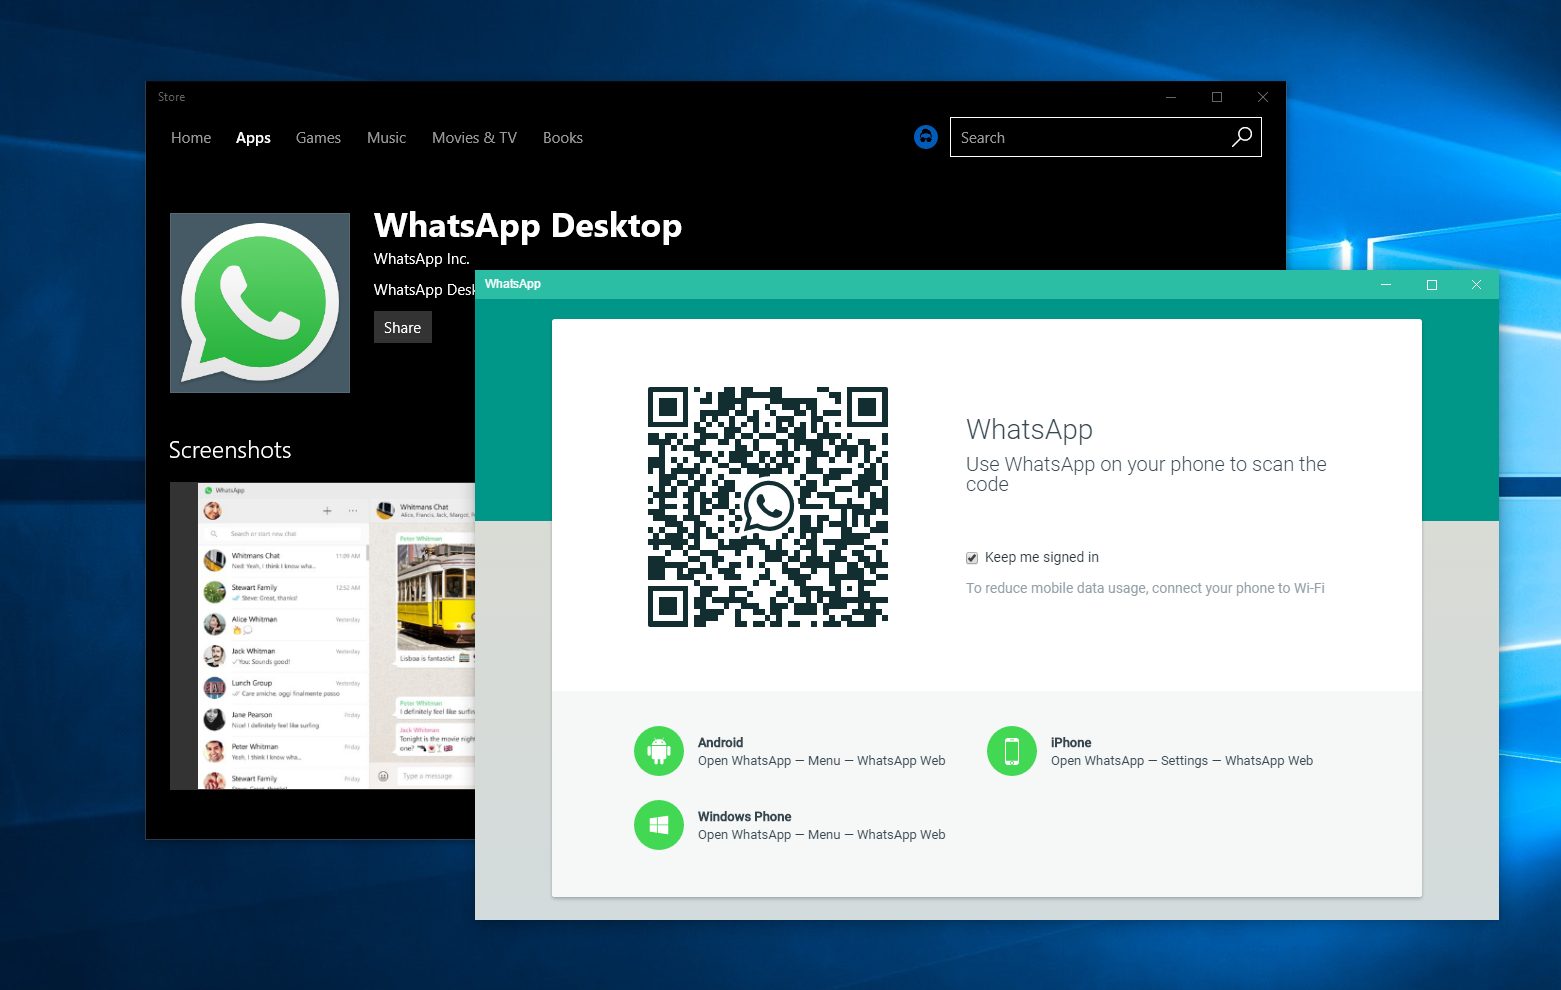 Adds biometric authentication on WhatsApp desktop